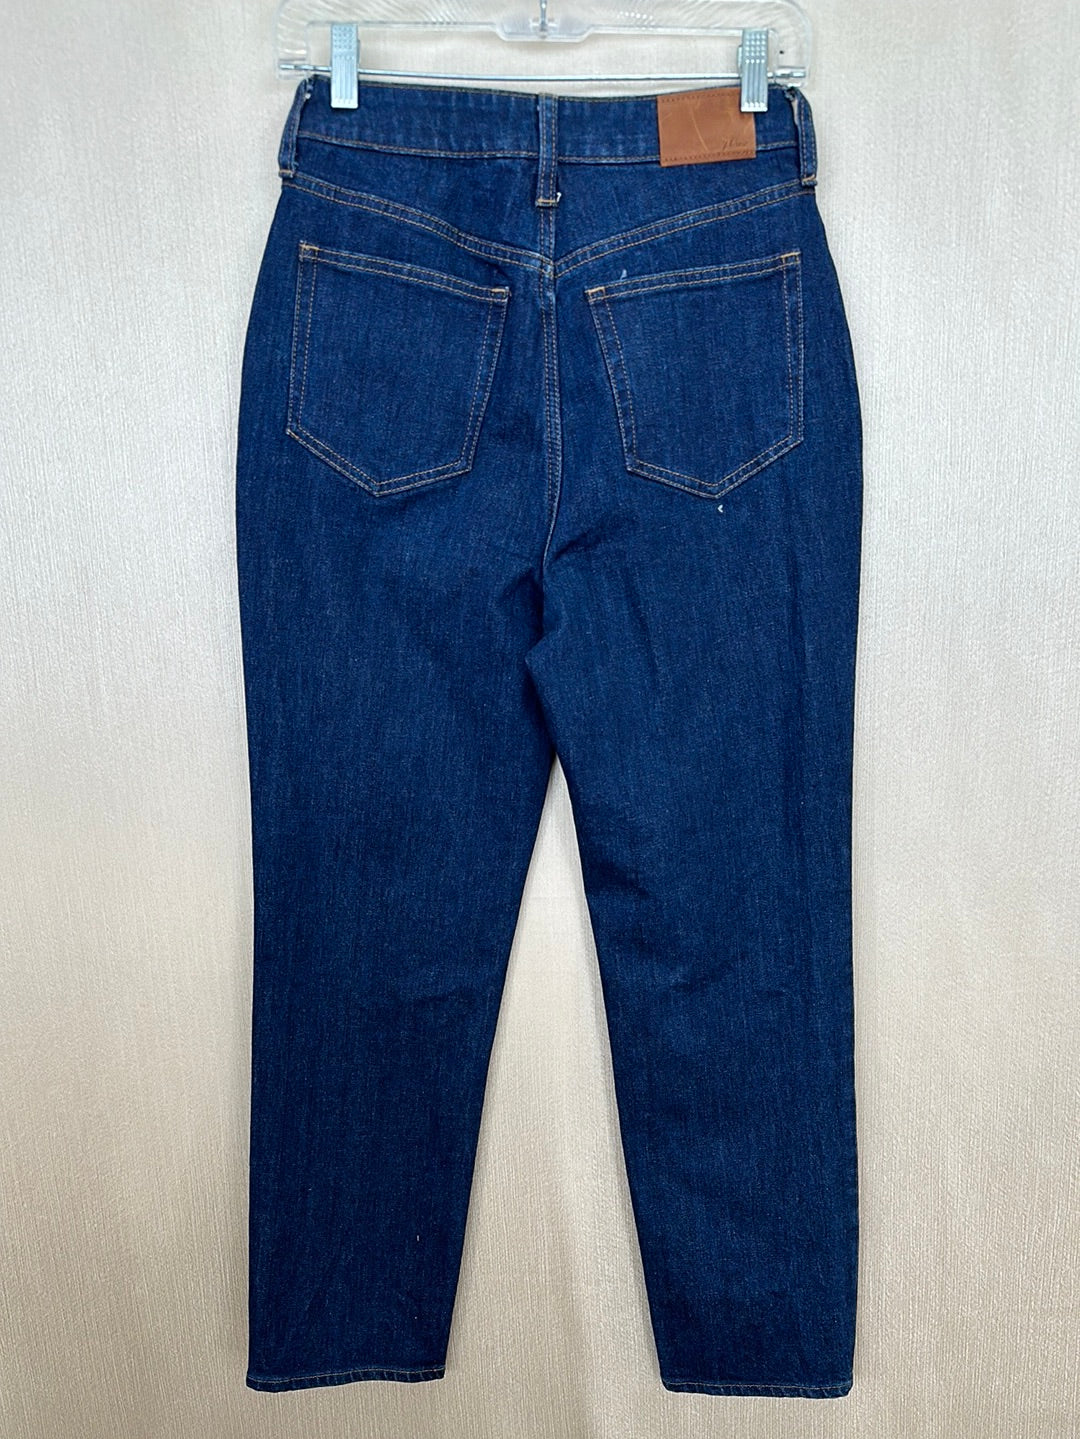 NWT - J. CREW dark wash Curvy Classic Straight Leg Jeans - 26